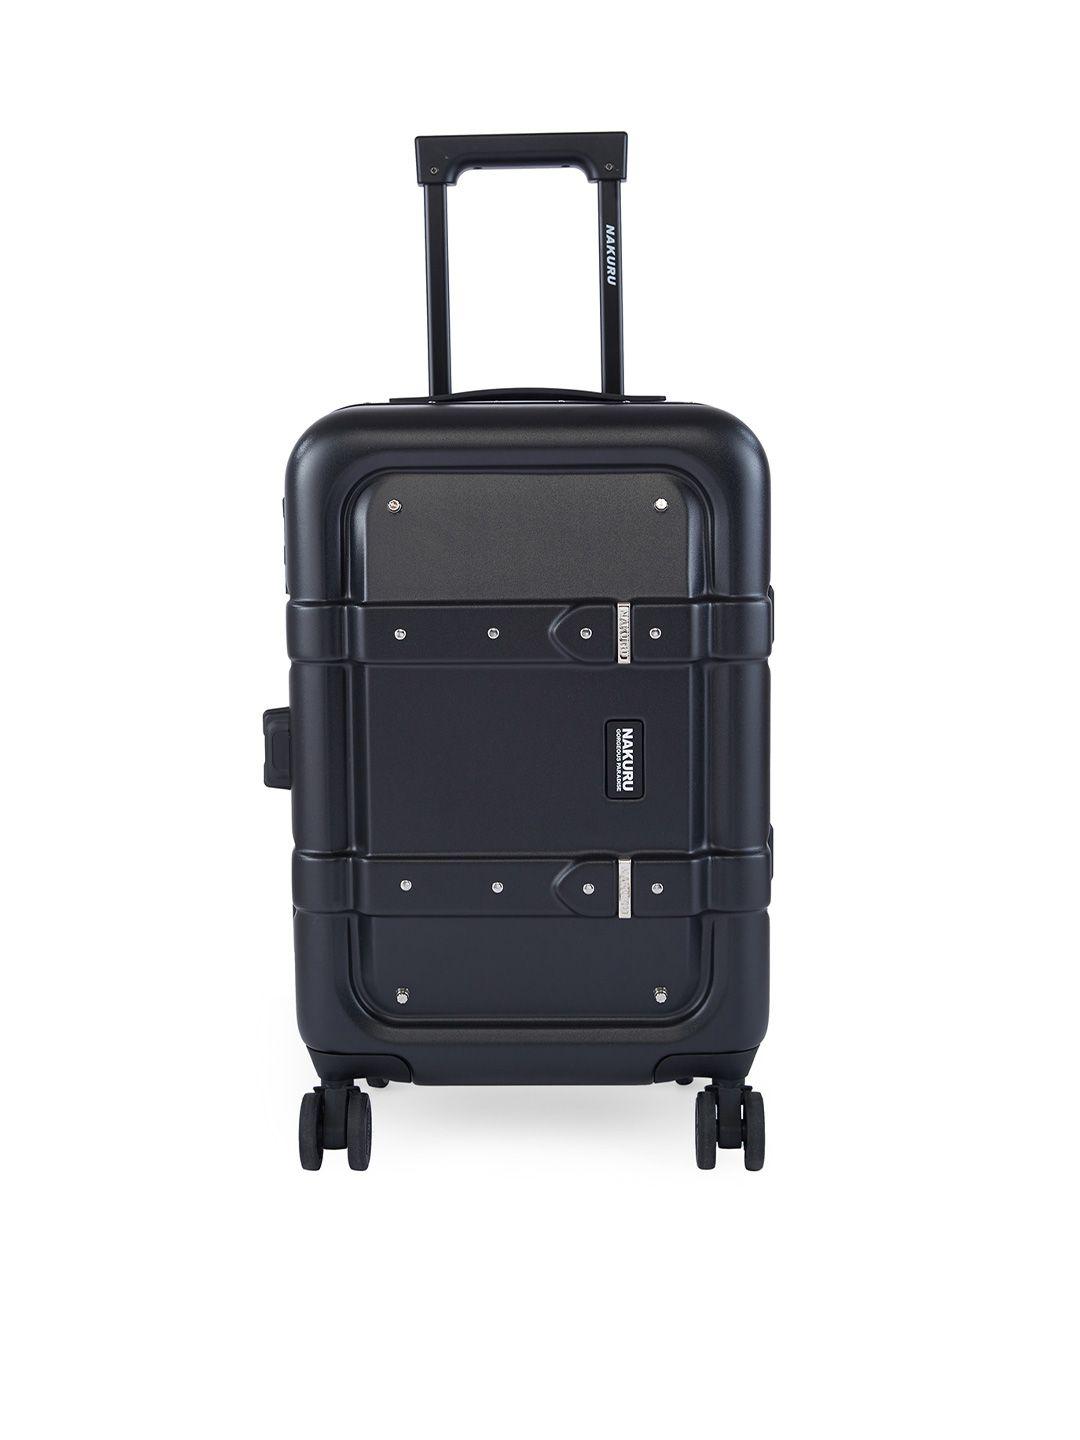 nakuru black textured soft sided cabin trolley suitcase